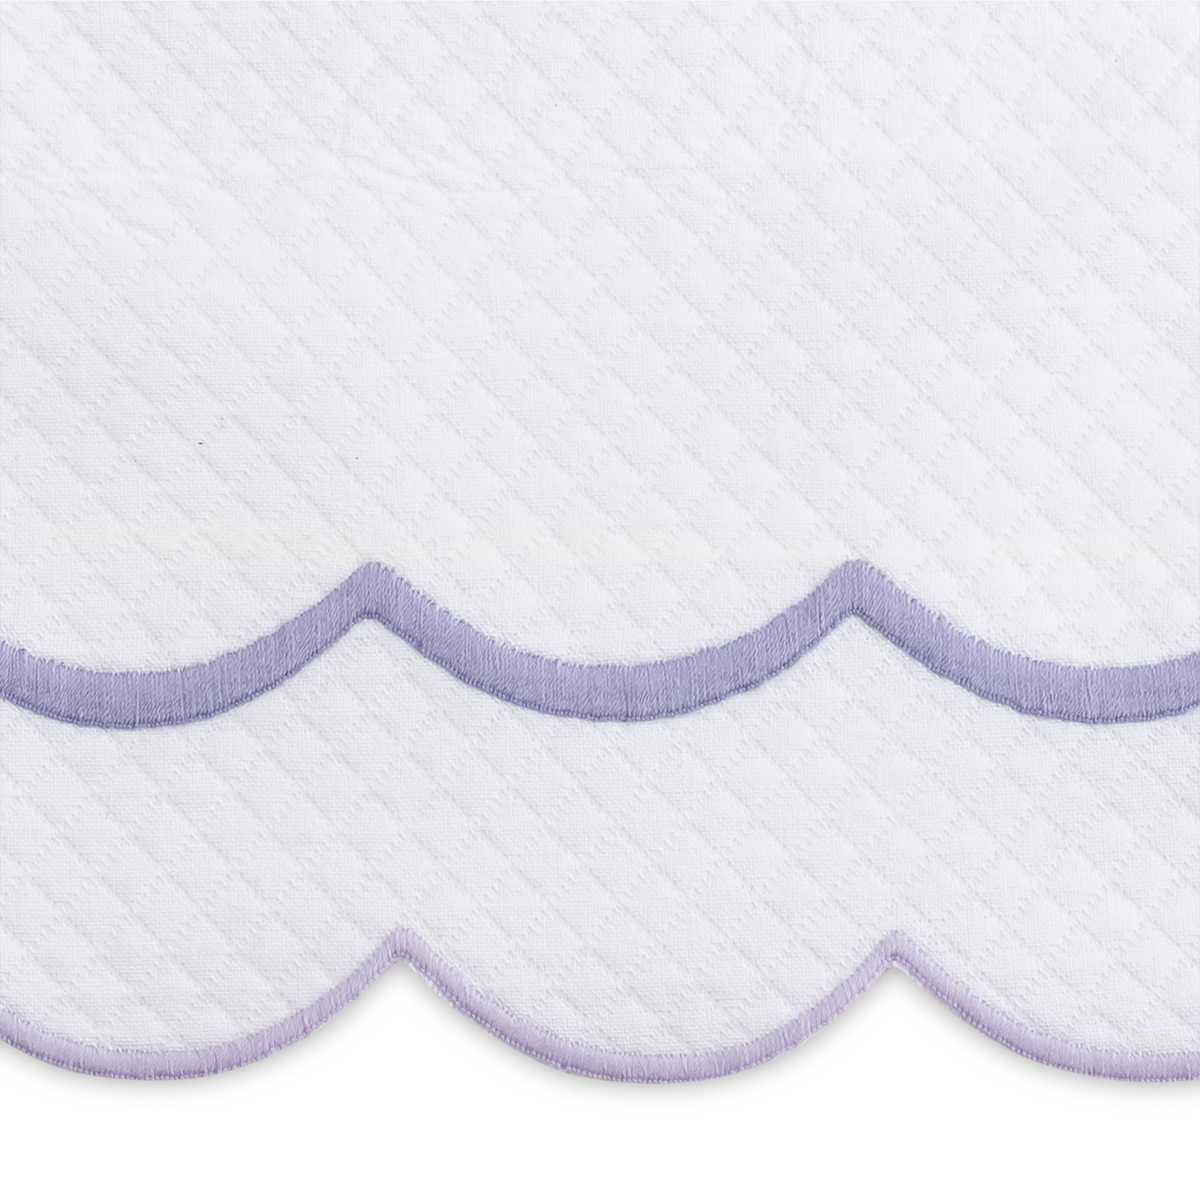 Closeup of Matouk India Pique Bedding Swatch Sample in Lilac Color Fine Linen